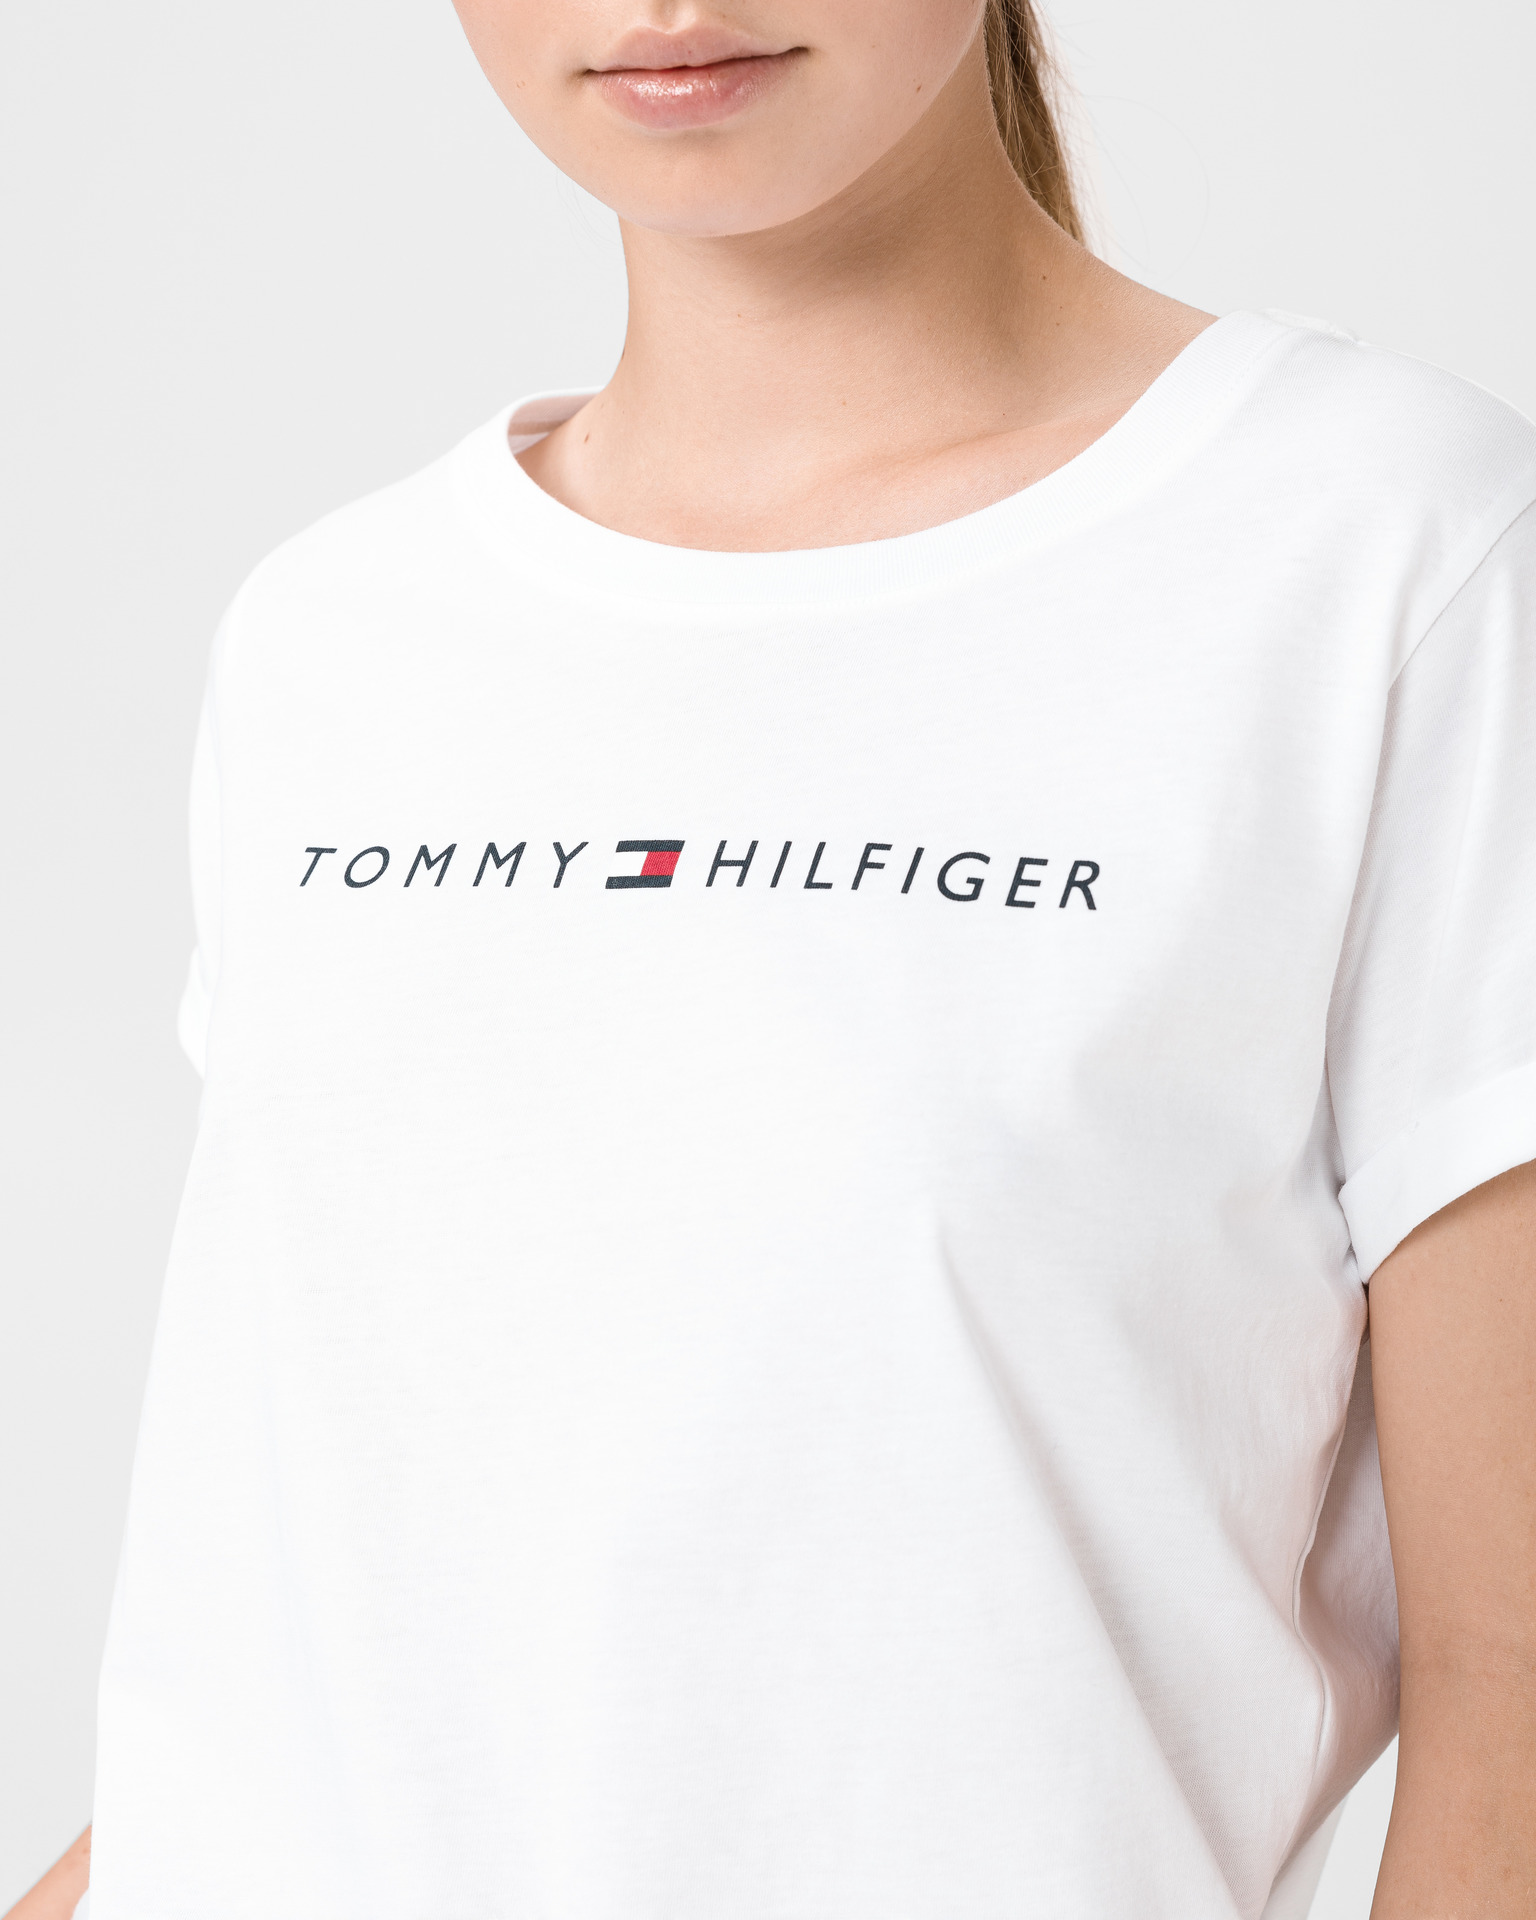 tommy hilfiger original shirt